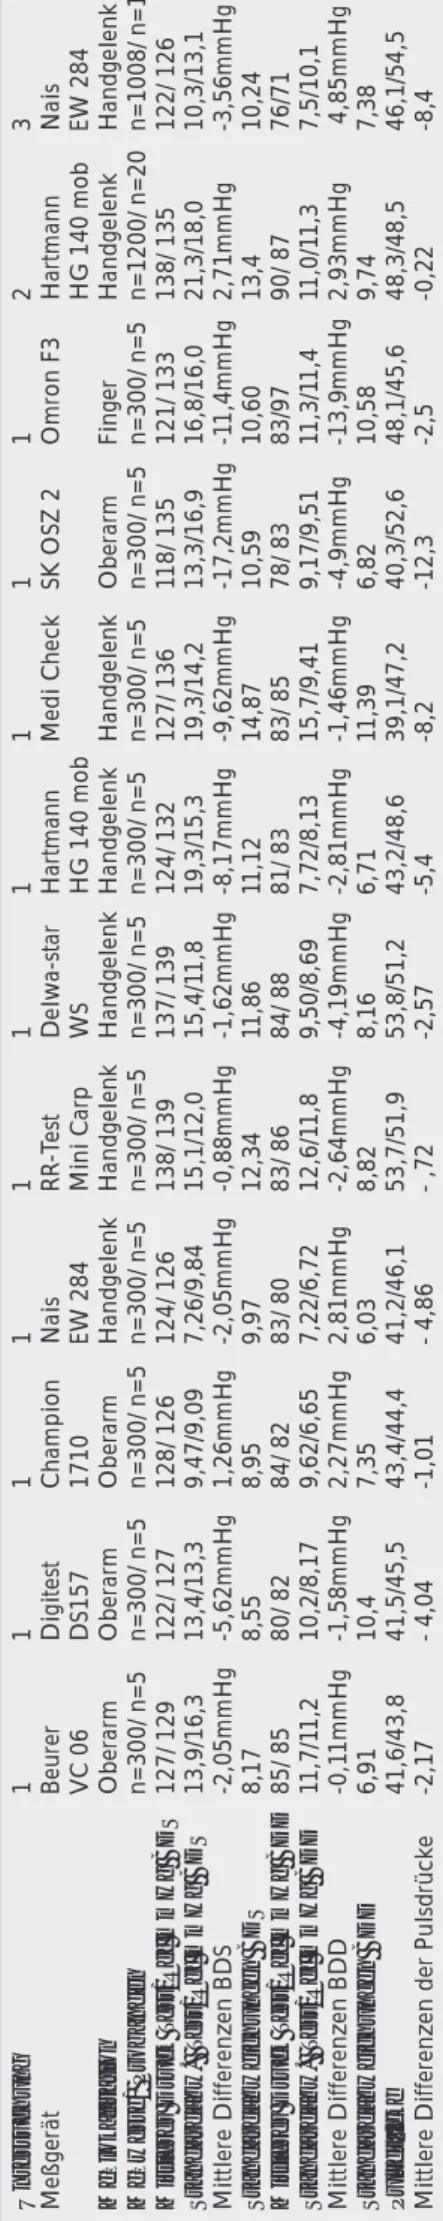 Tabelle 3A: Vergleich einiger Selbstmeßgeräte zu Spacelabs 90207 Untersuchung111111111123 MeßgerätBeurerDigitestChampionNaisRR-TestDelwa-starHartmannMedi CheckSK OSZ 2Omron F3HartmannNais VC 06DS1571710EW 284Mini CarpWSHG 140 mobHG 140 mobEW 284 Meßlokalis